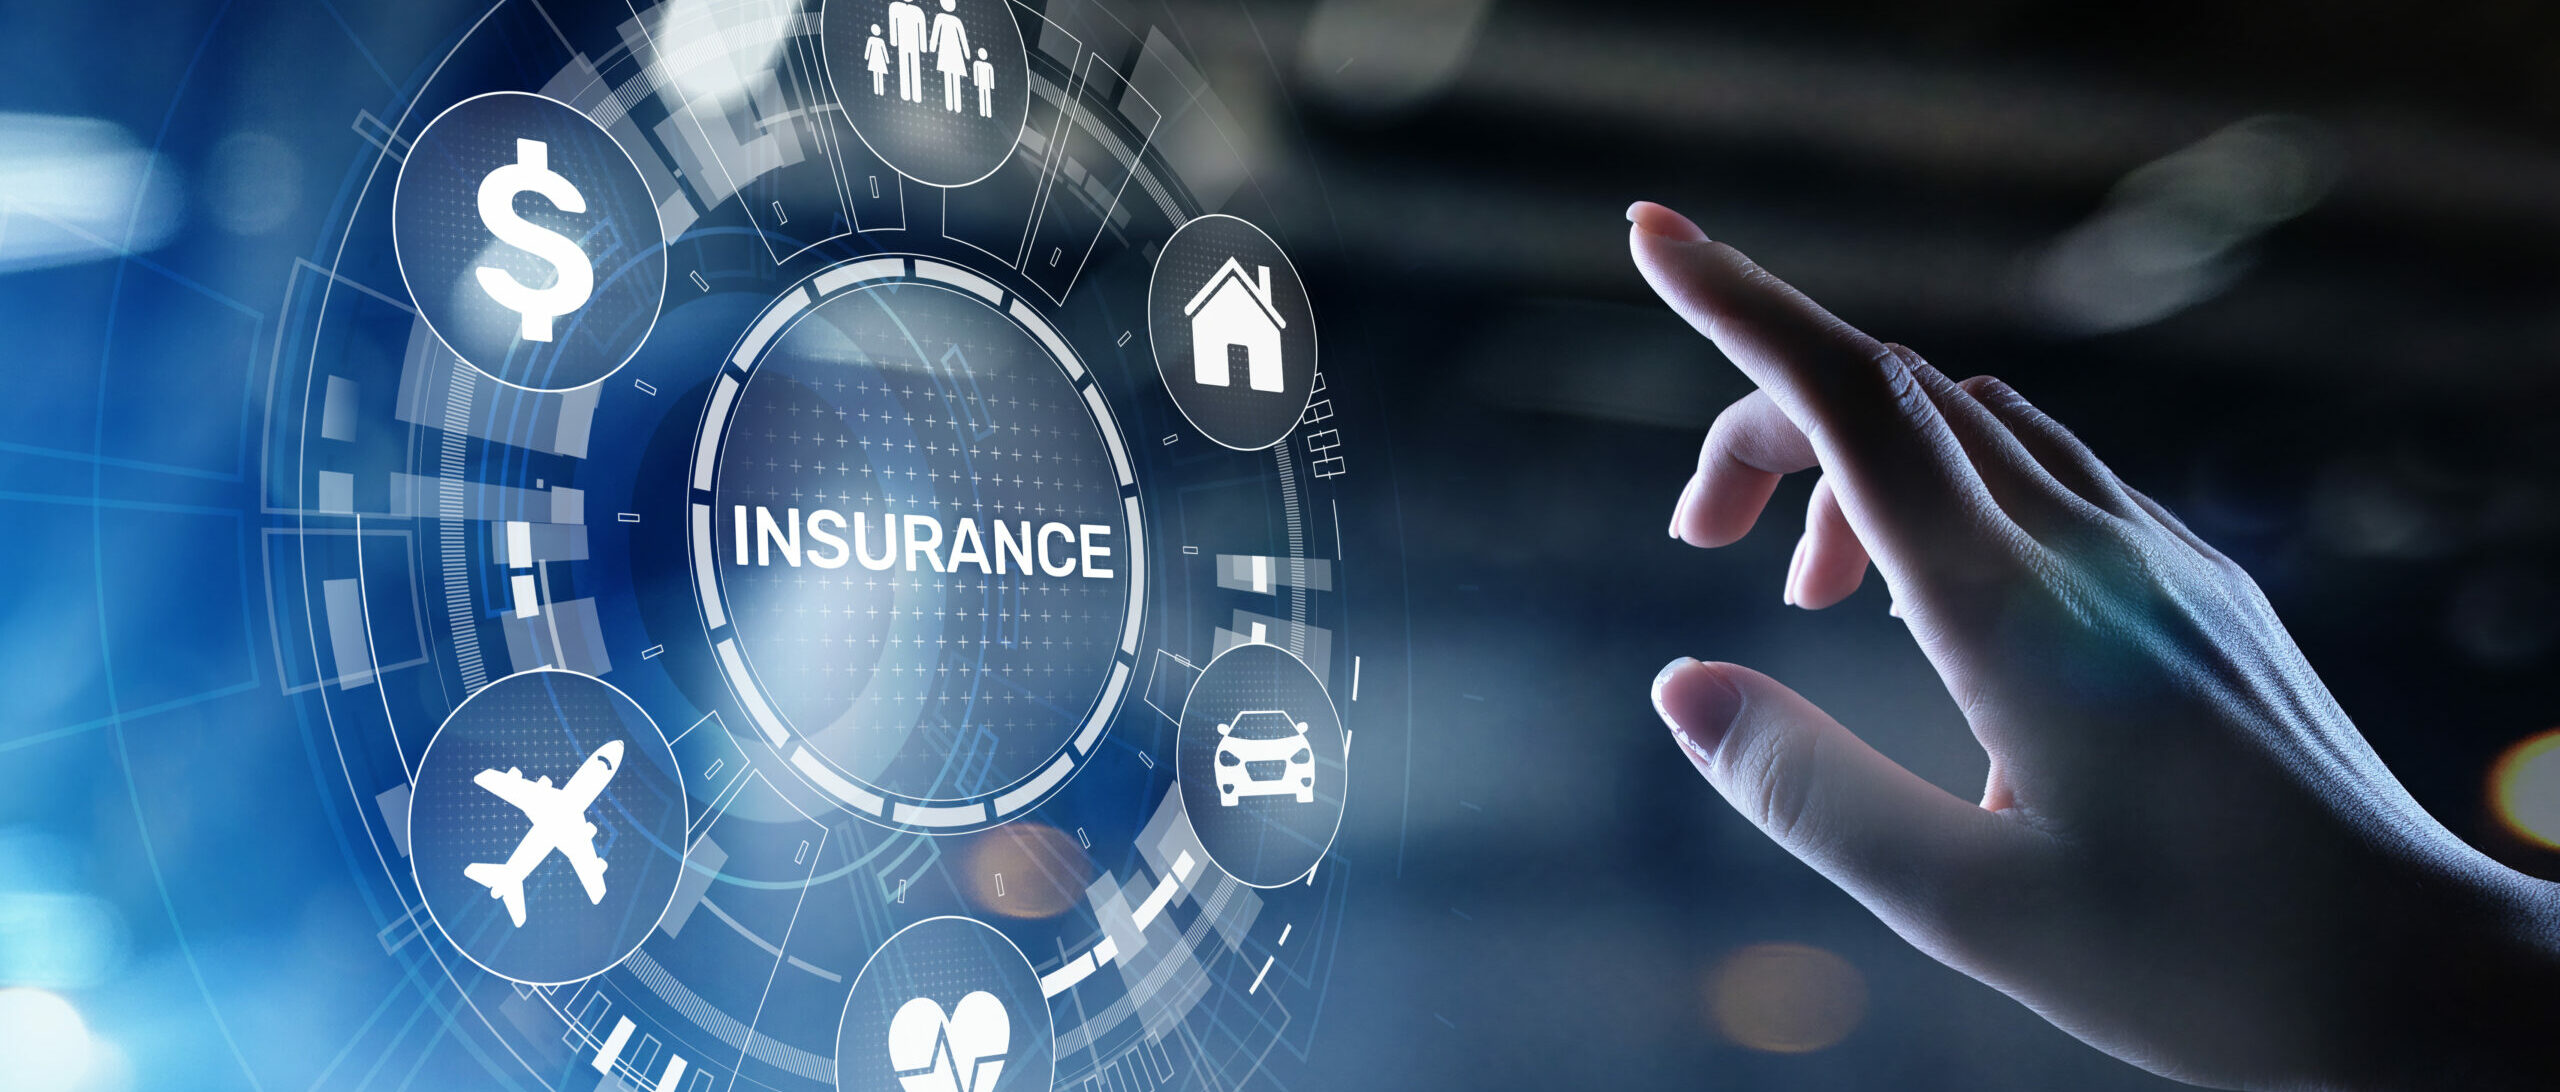 Unum Group Insurance Data Breach Investigation